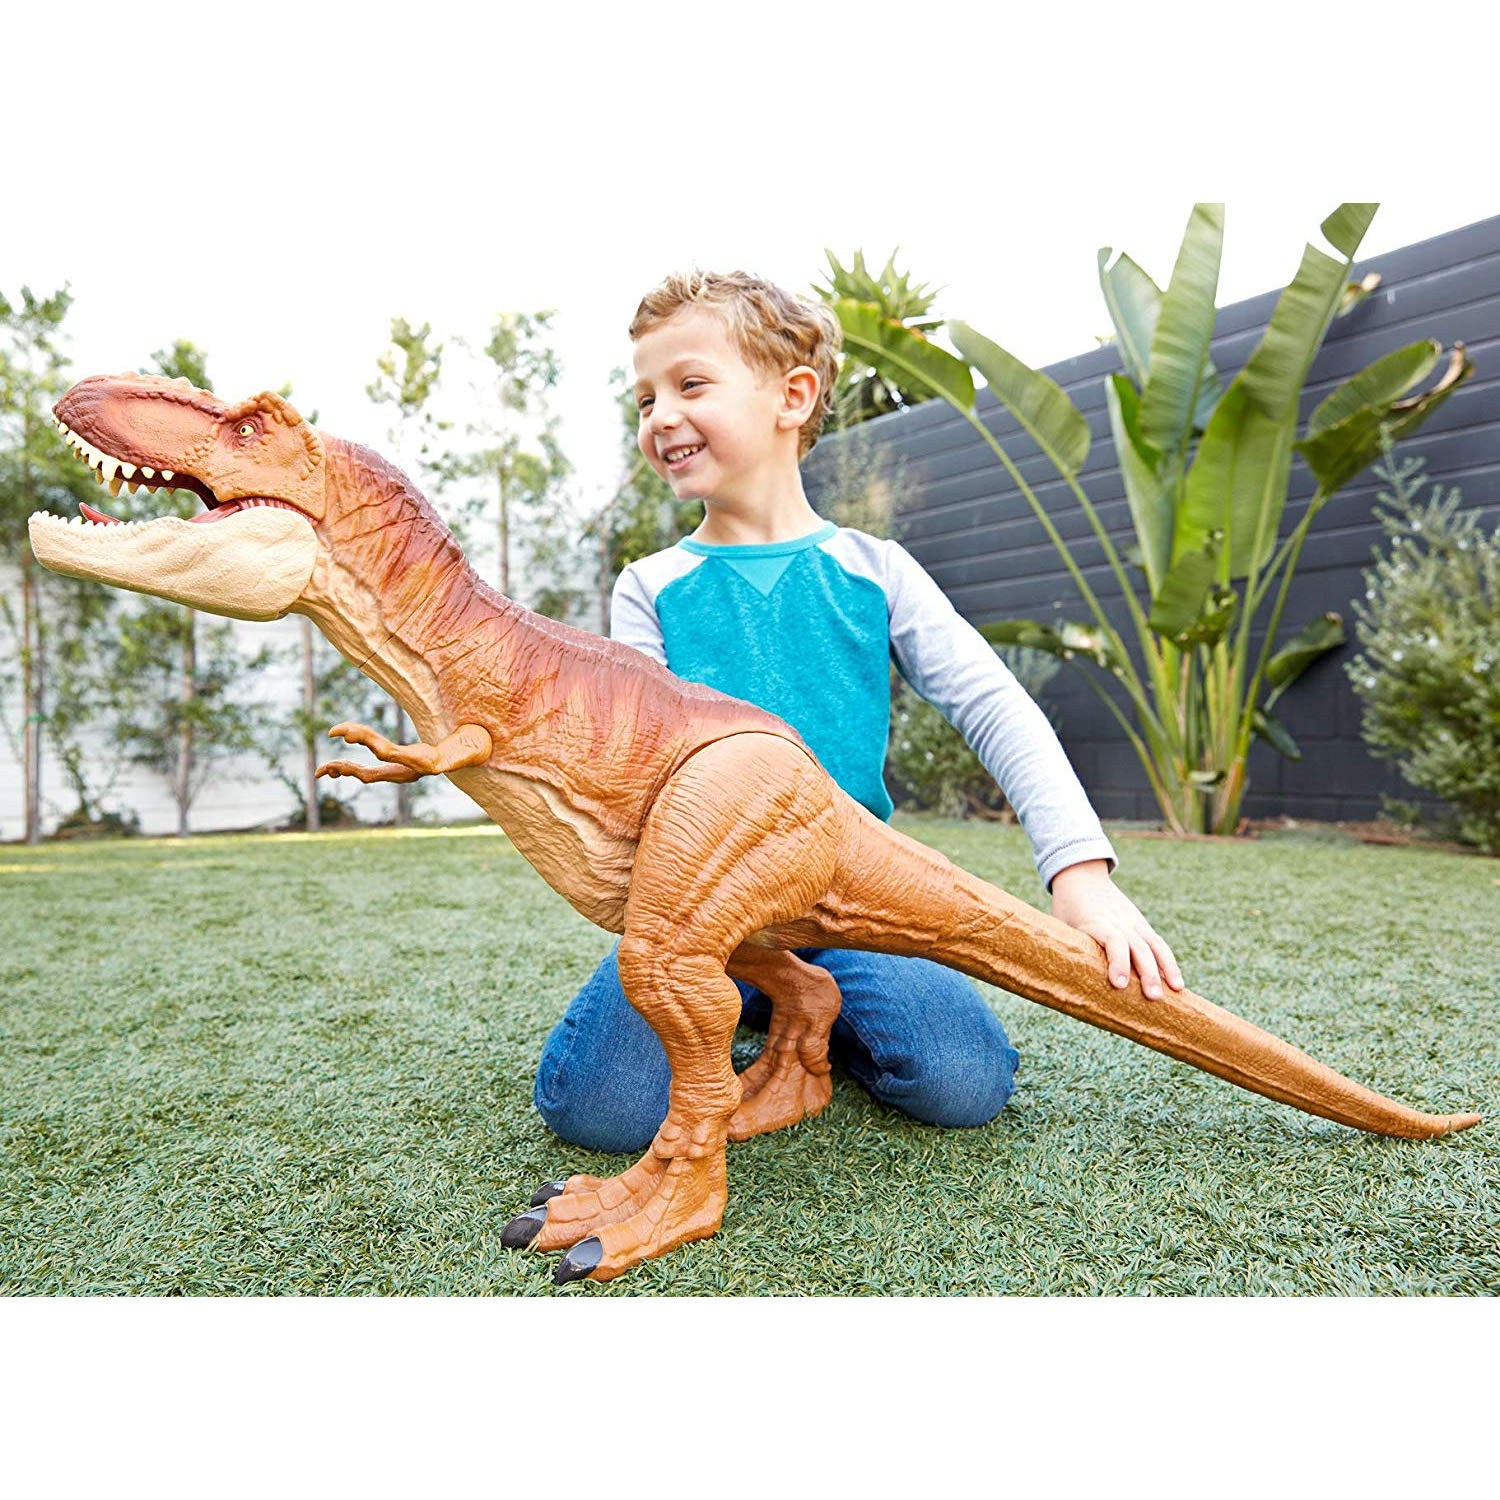 Jurassic World® - Колоссальный тиранозавр Рекс  